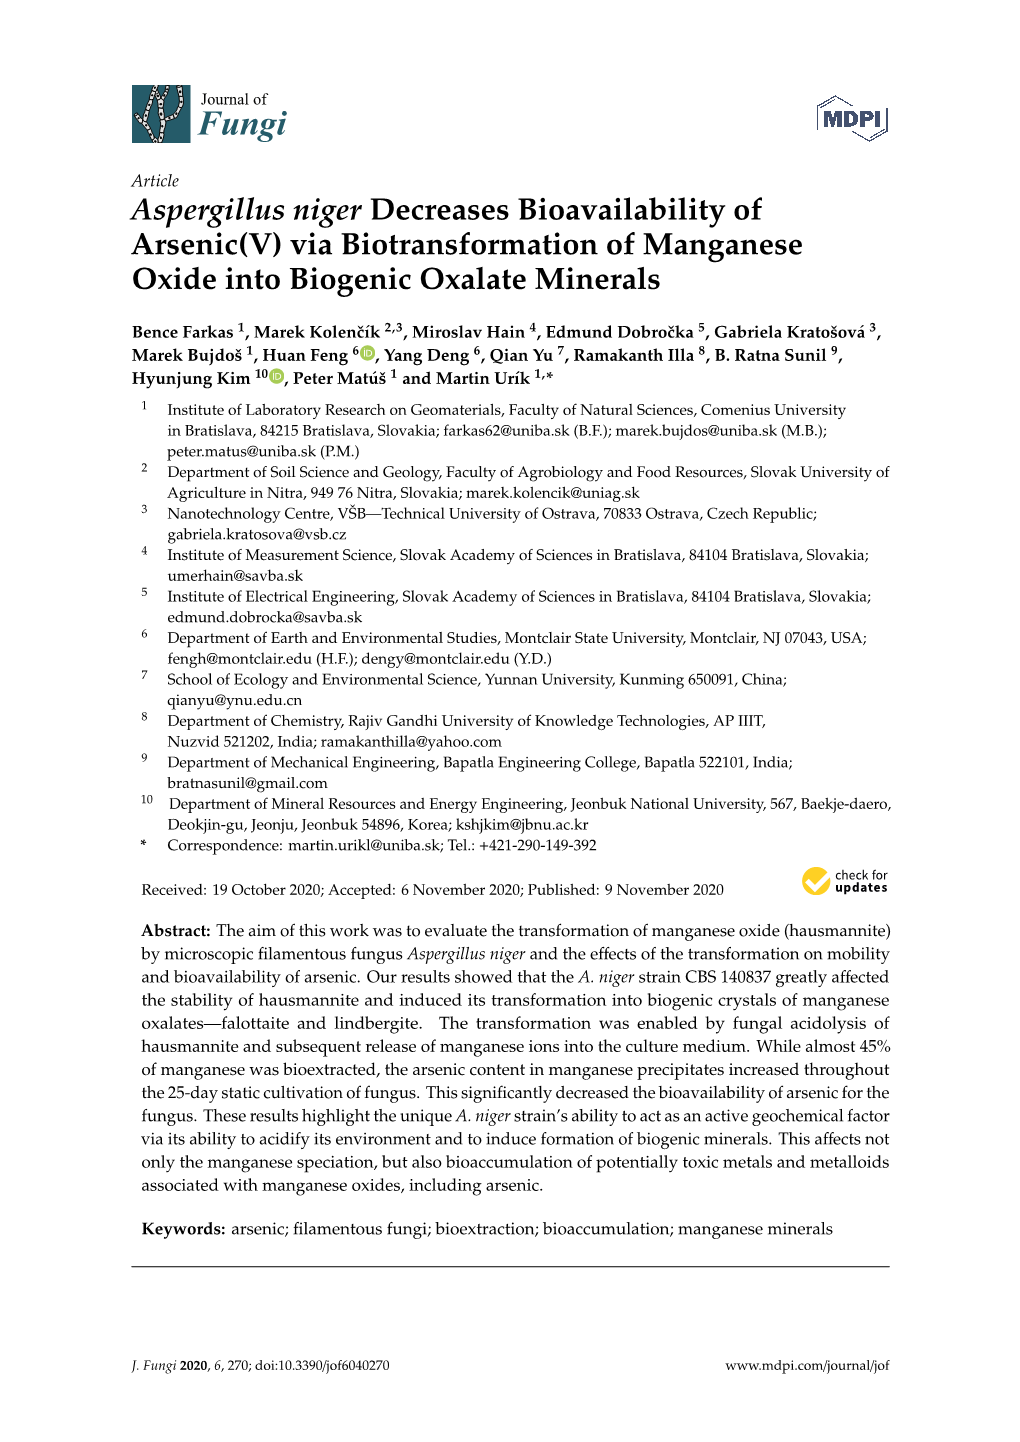 Aspergillus Niger Decreases Bioavailability of Arsenic(V) Via Biotransformation of Manganese Oxide Into Biogenic Oxalate Minerals